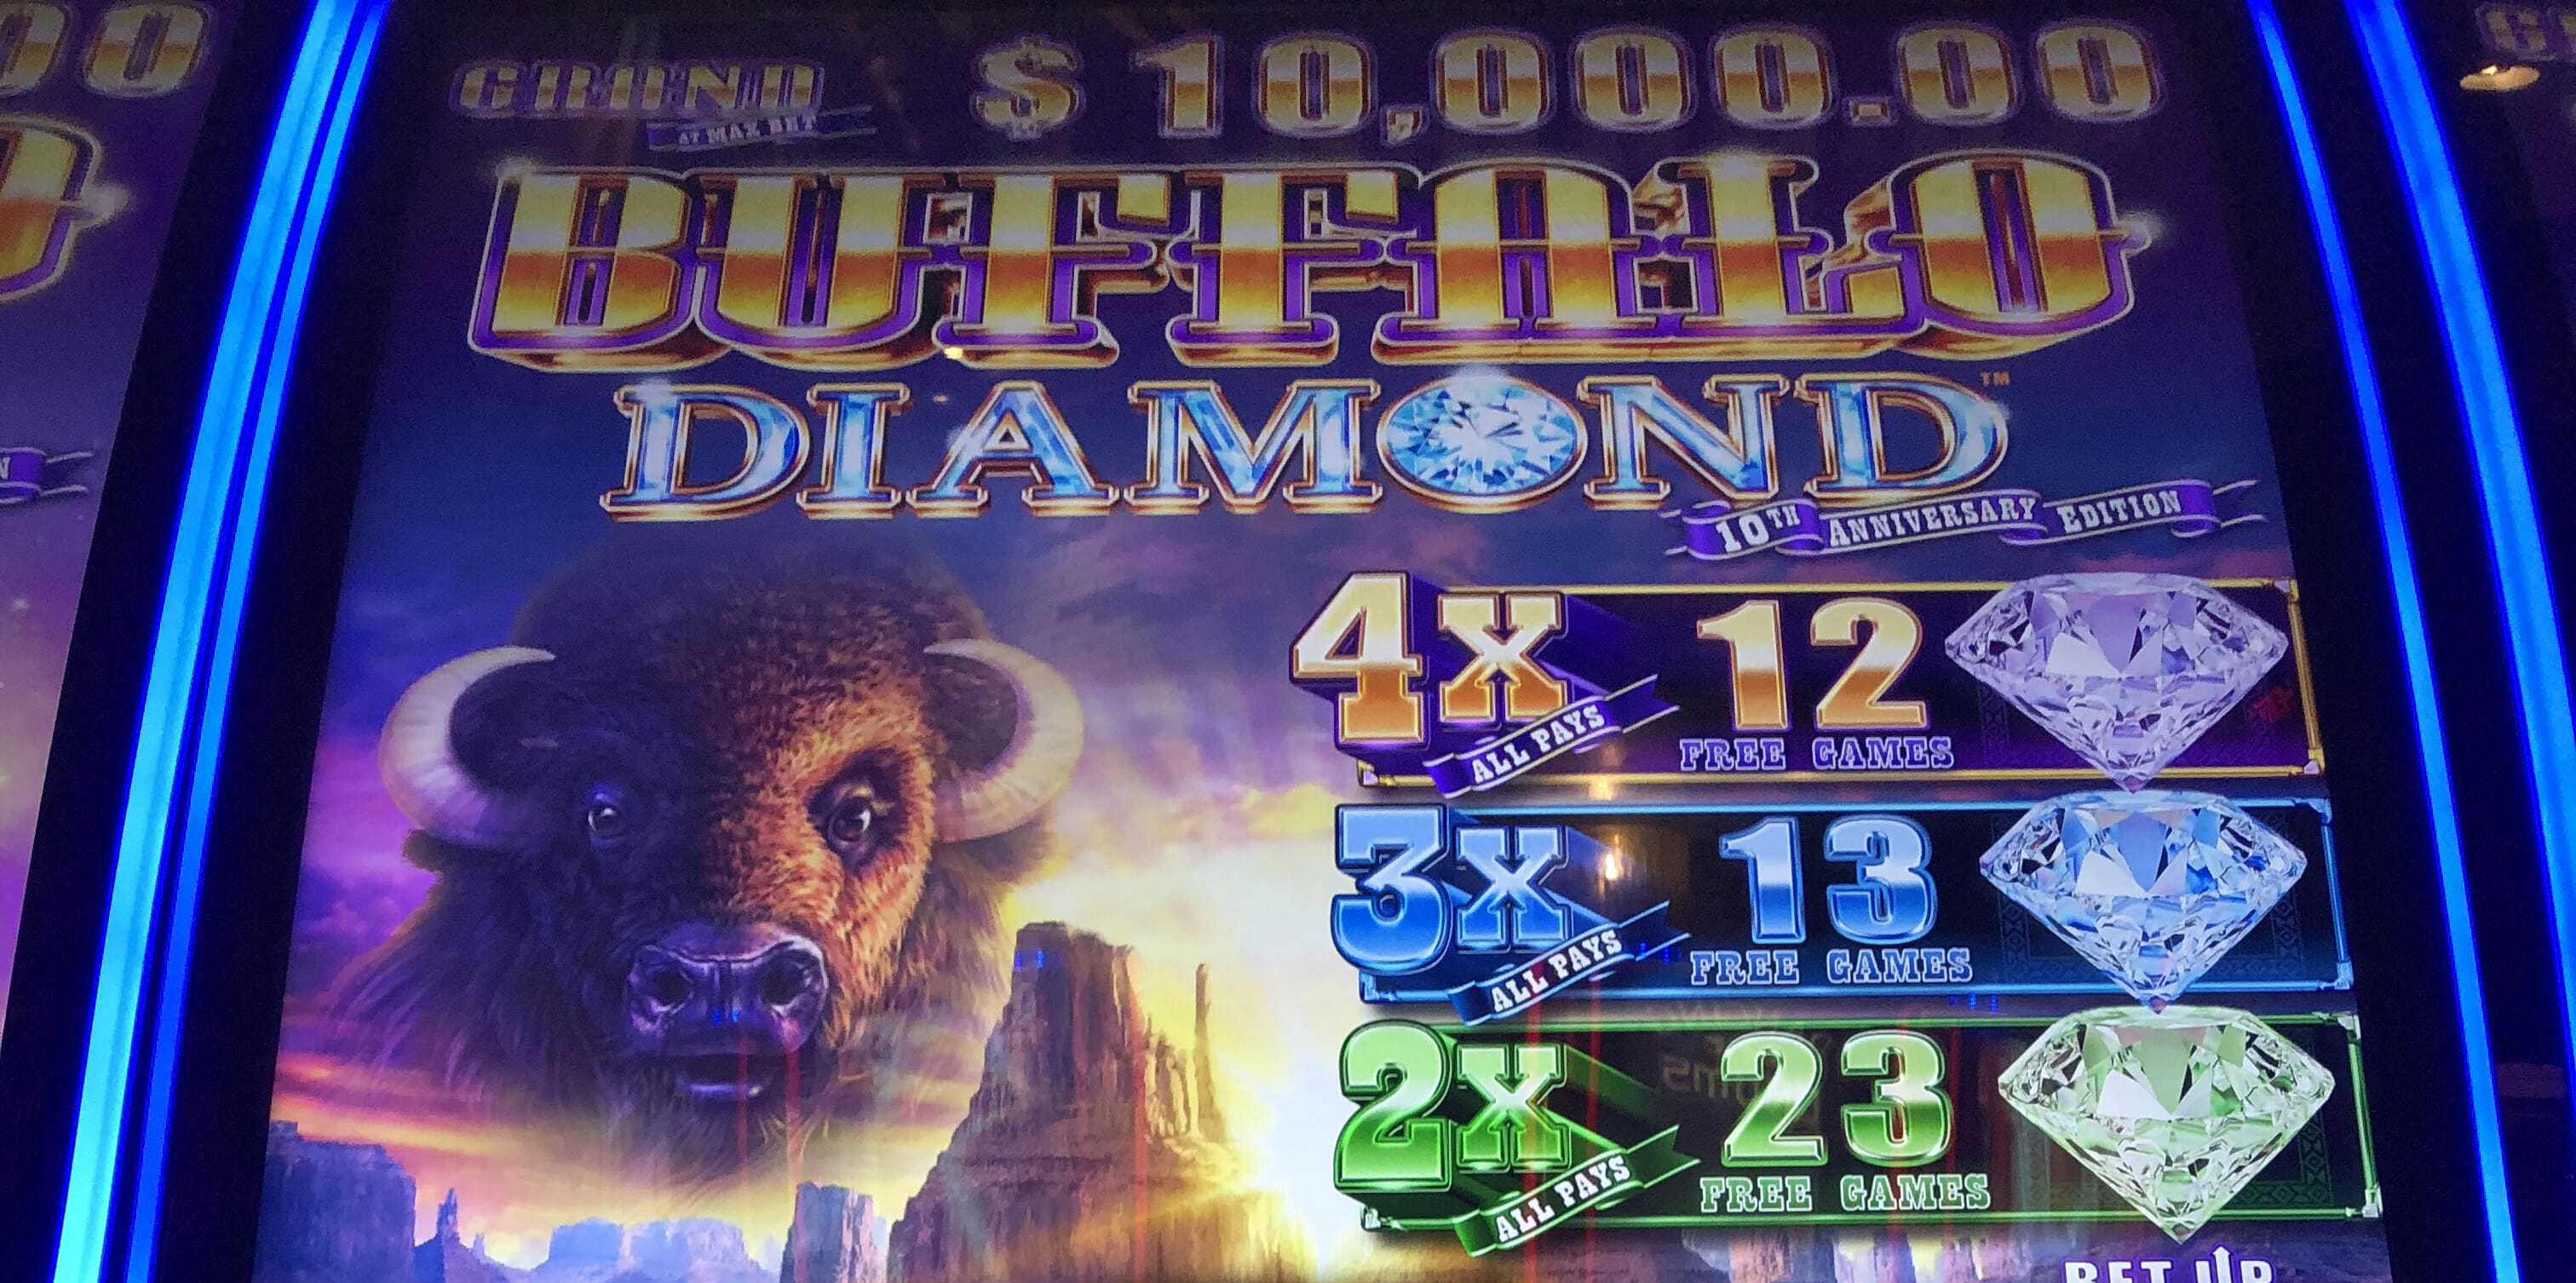 Buffalo stampede slot machine free play